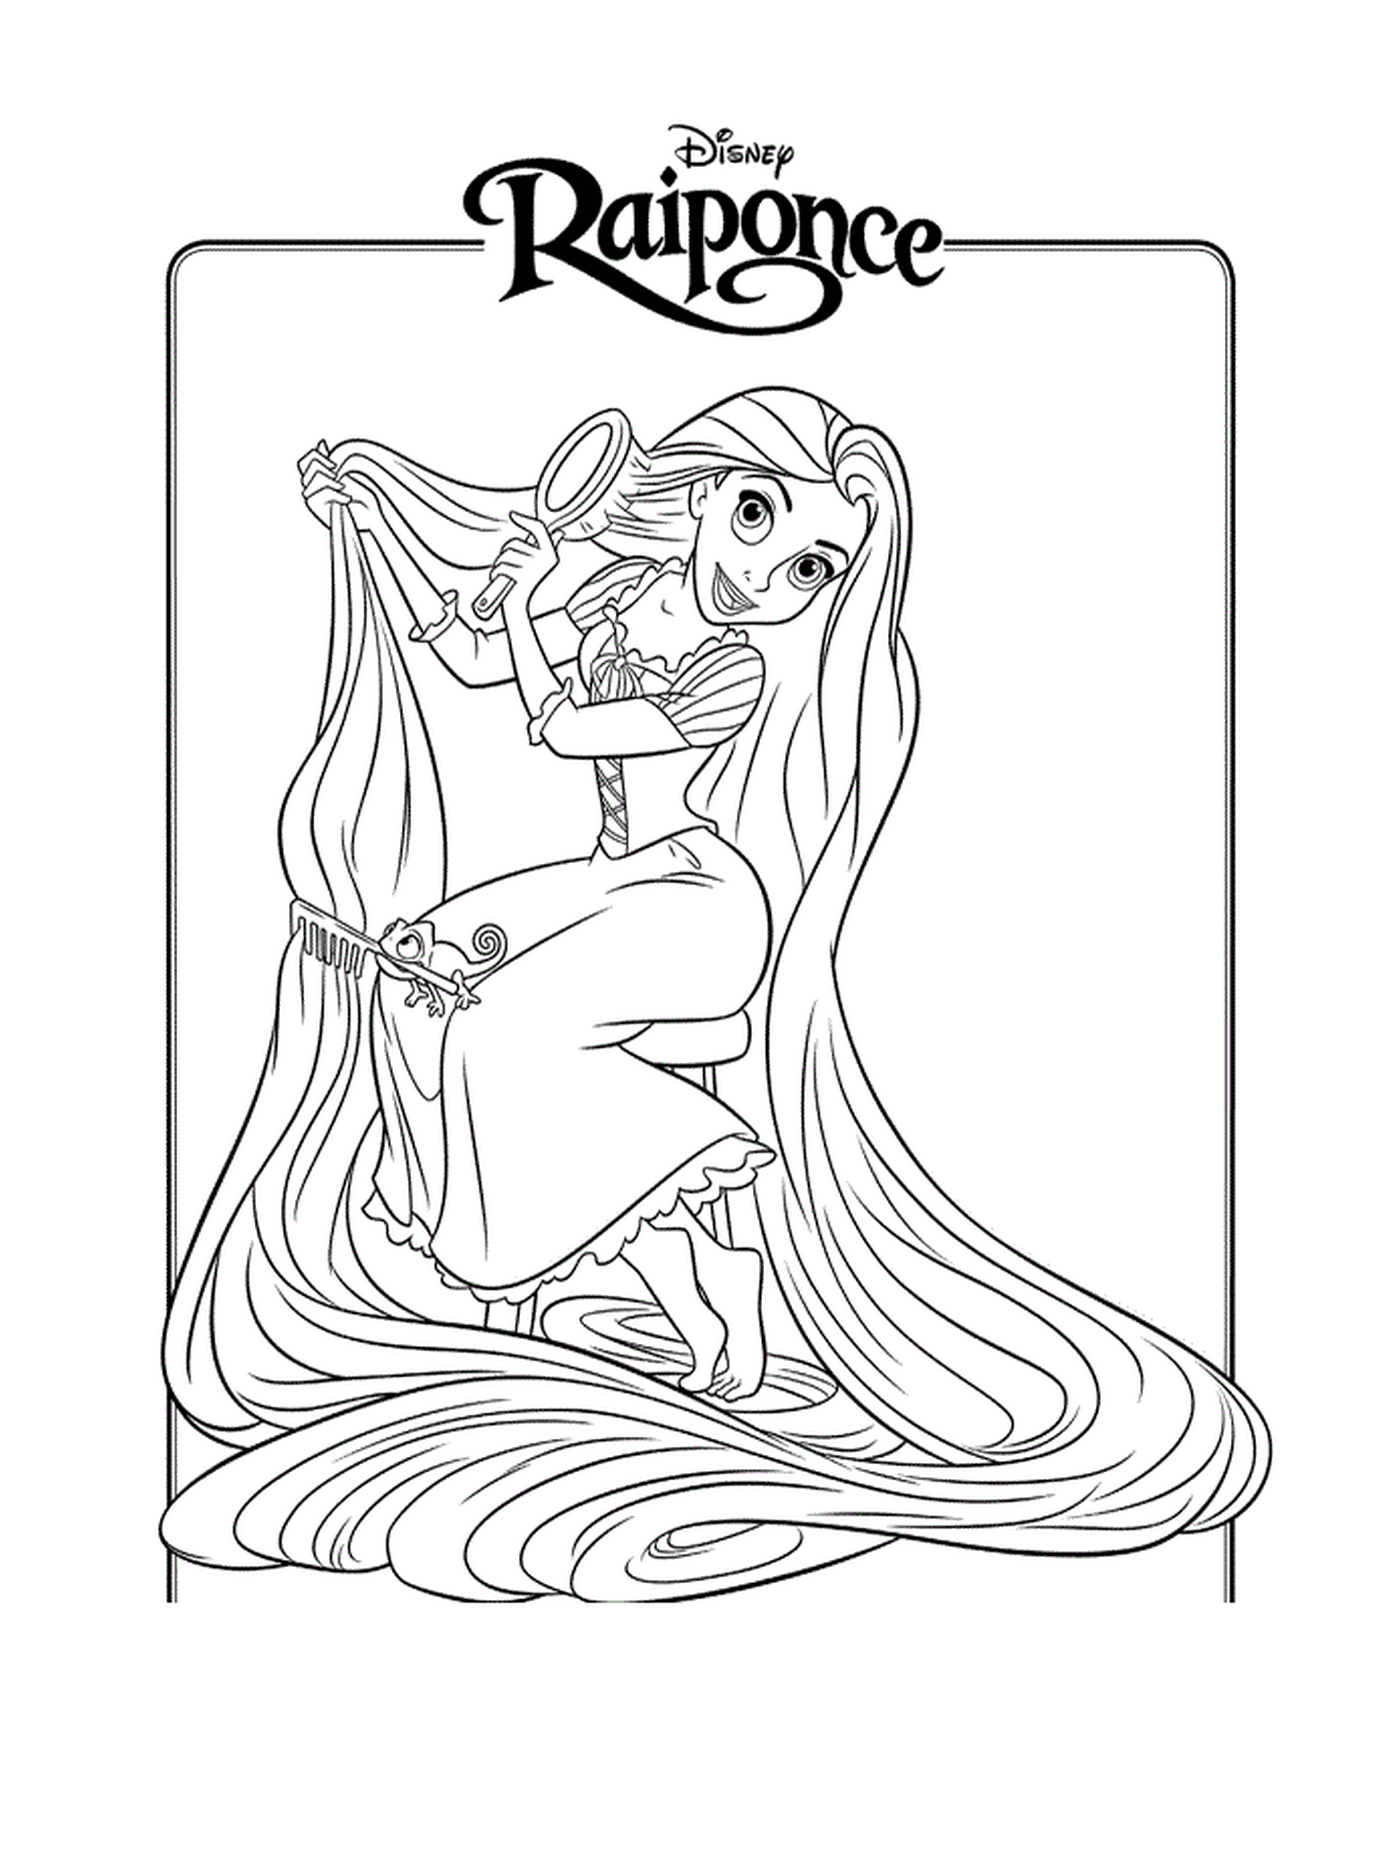  Raiponce, a woman with endless hair 